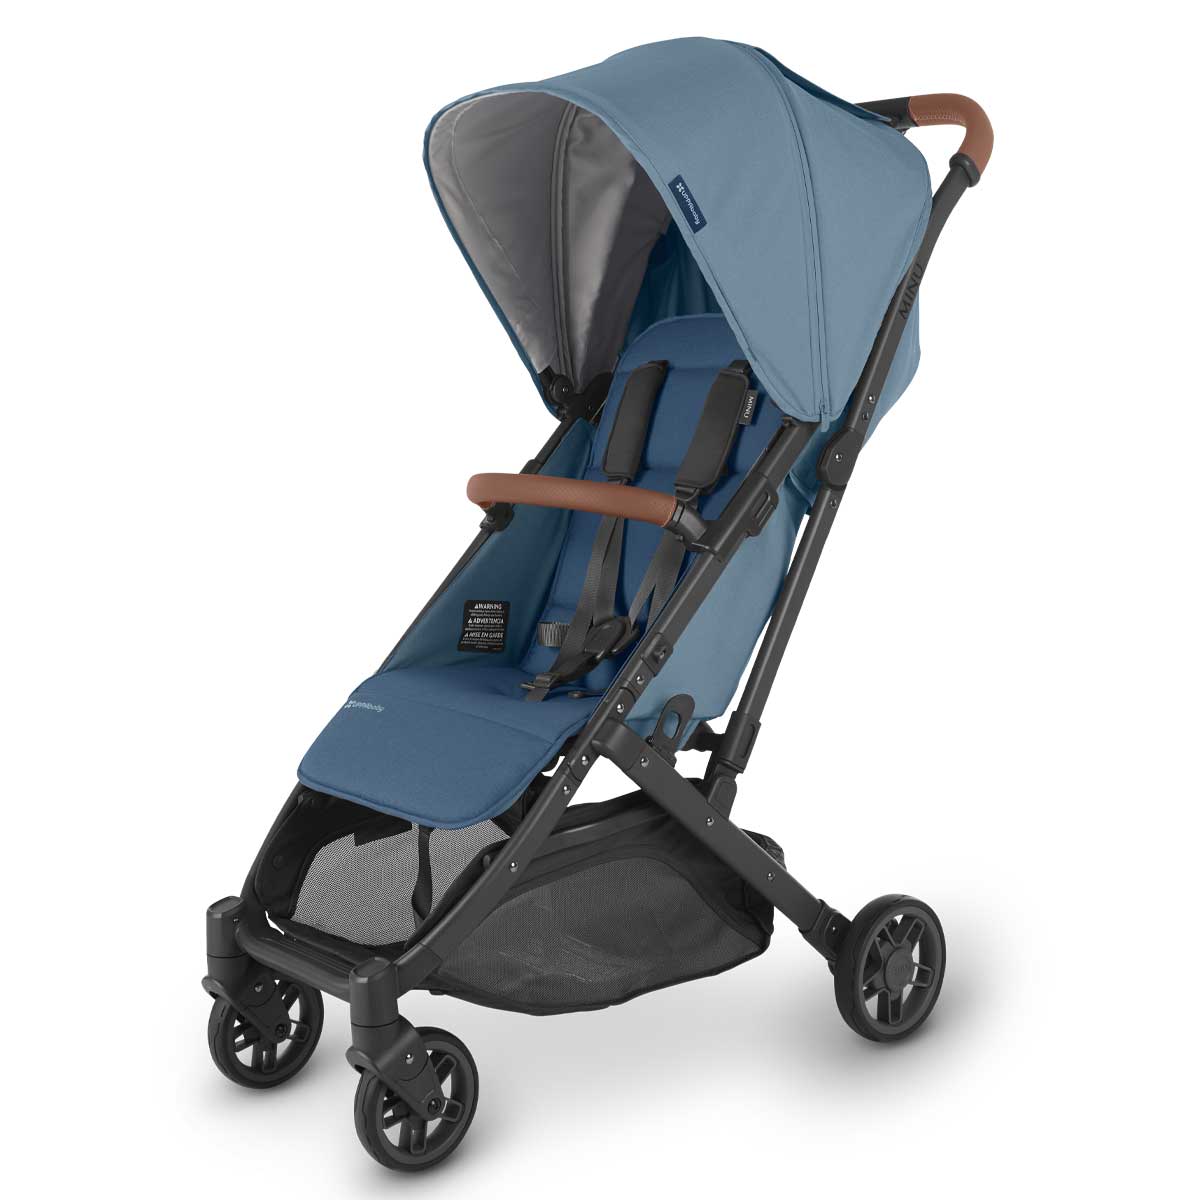 UPPAbaby compact stroller UPPAbaby MINU V2 Stroller - Charlotte (Coastal Blue/Carbon/Saddle Leather)